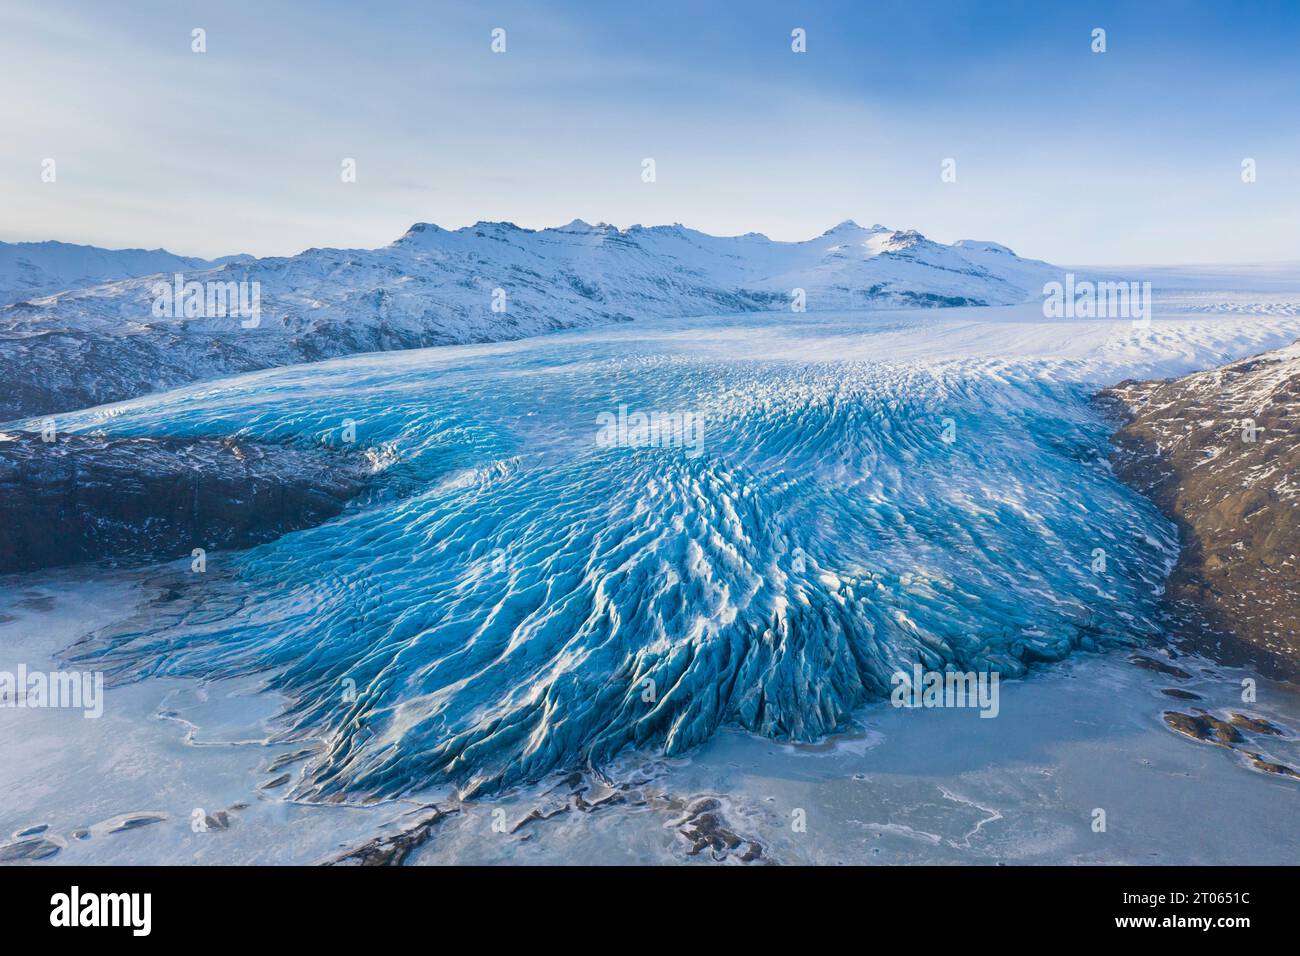 Vue aérienne sur la langue de glace Falljökull en hiver, l'un des nombreux glaciers de sortie de Vatnajökull / glacier Vatna, la plus grande calotte glaciaire d'Islande, Austurland Banque D'Images